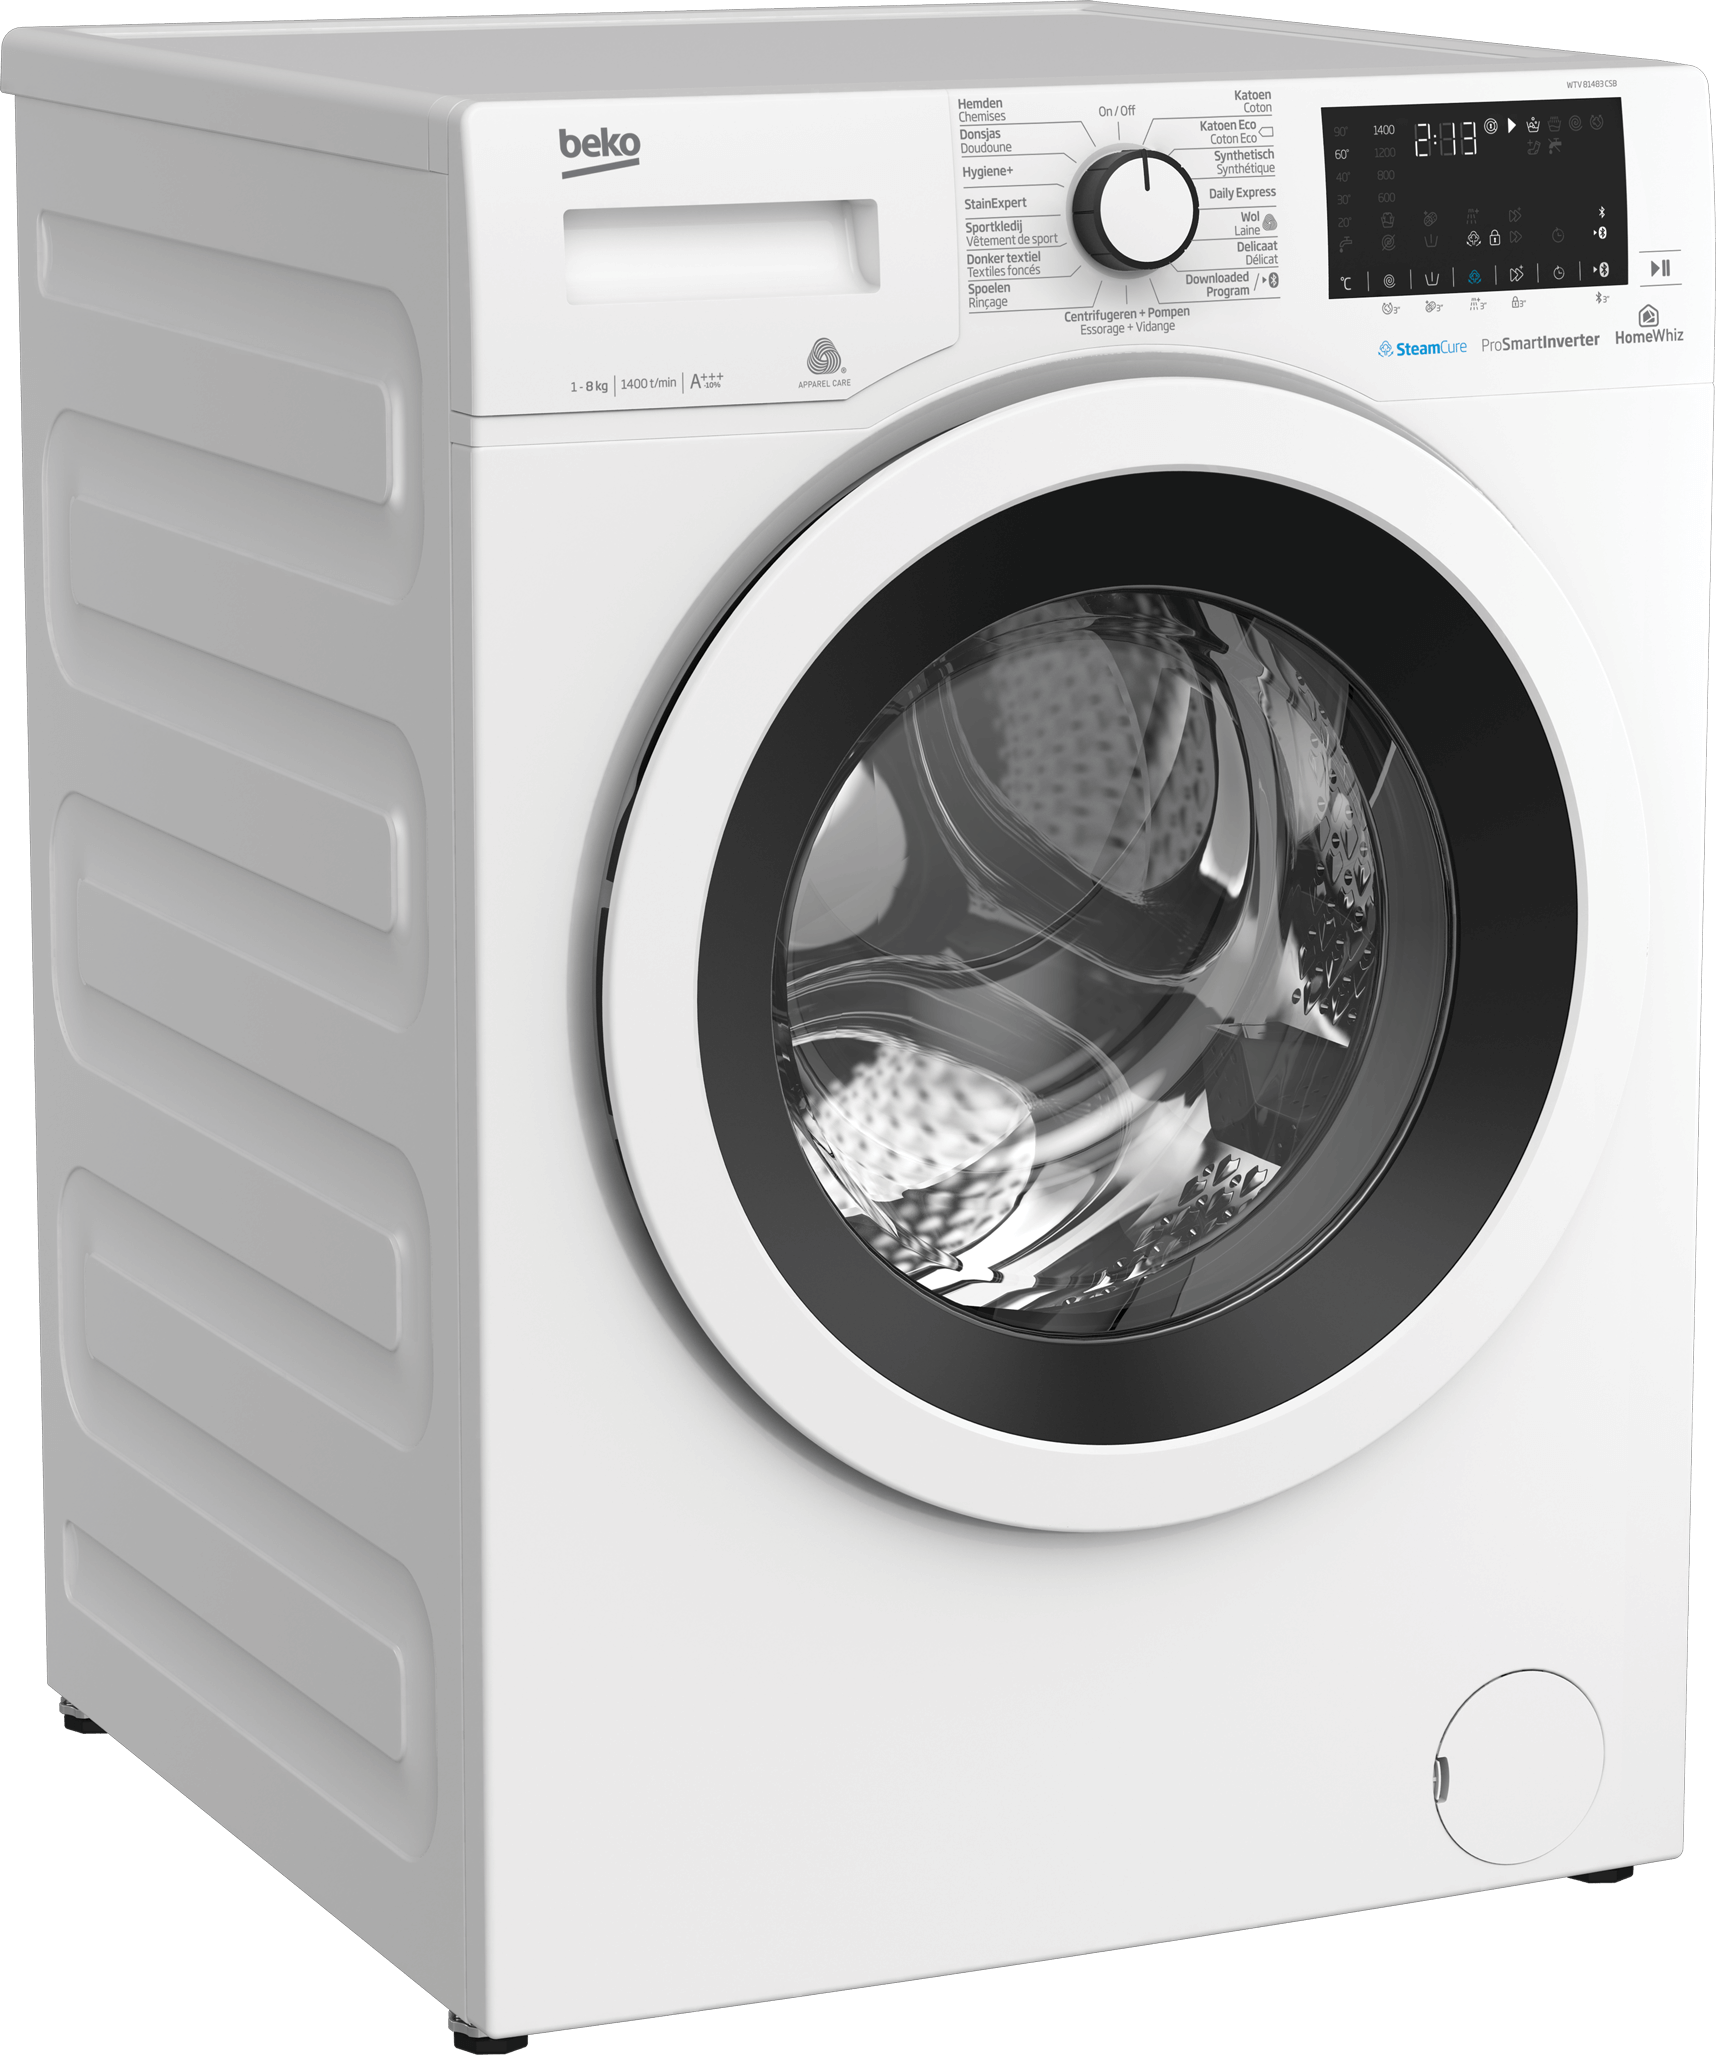 Wasmachine Beko 1400t/m kg - i.Lectro - Elektro service aan webshop prijzen